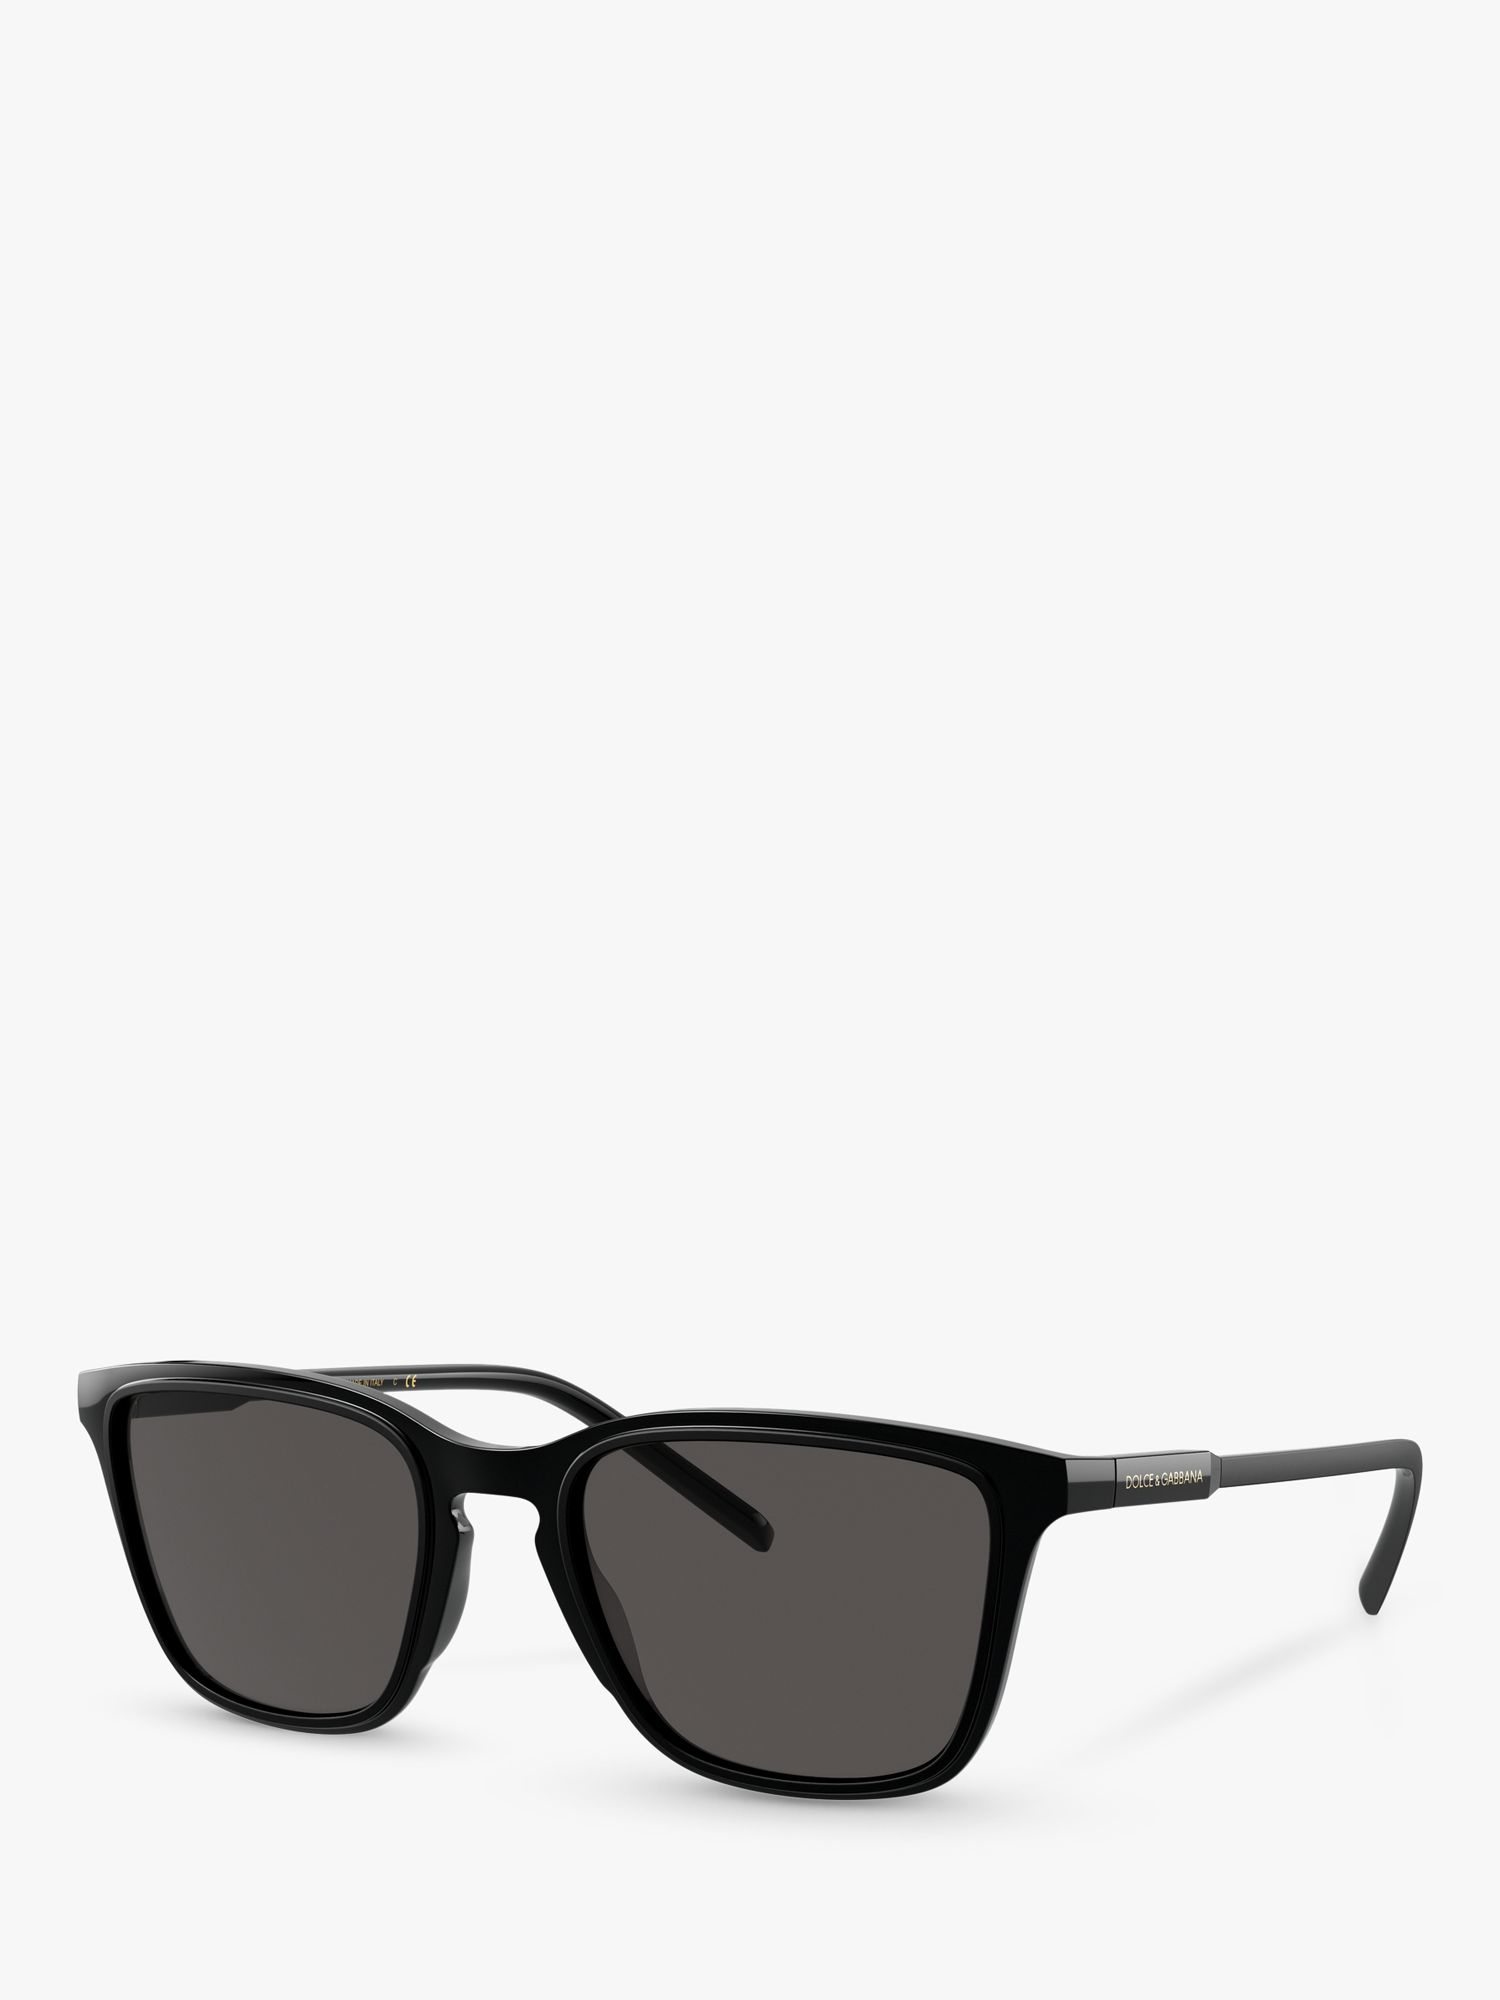 Dolce & Gabbana DG6145 Men's Square Sunglasses, Black/Dark Grey at John  Lewis & Partners